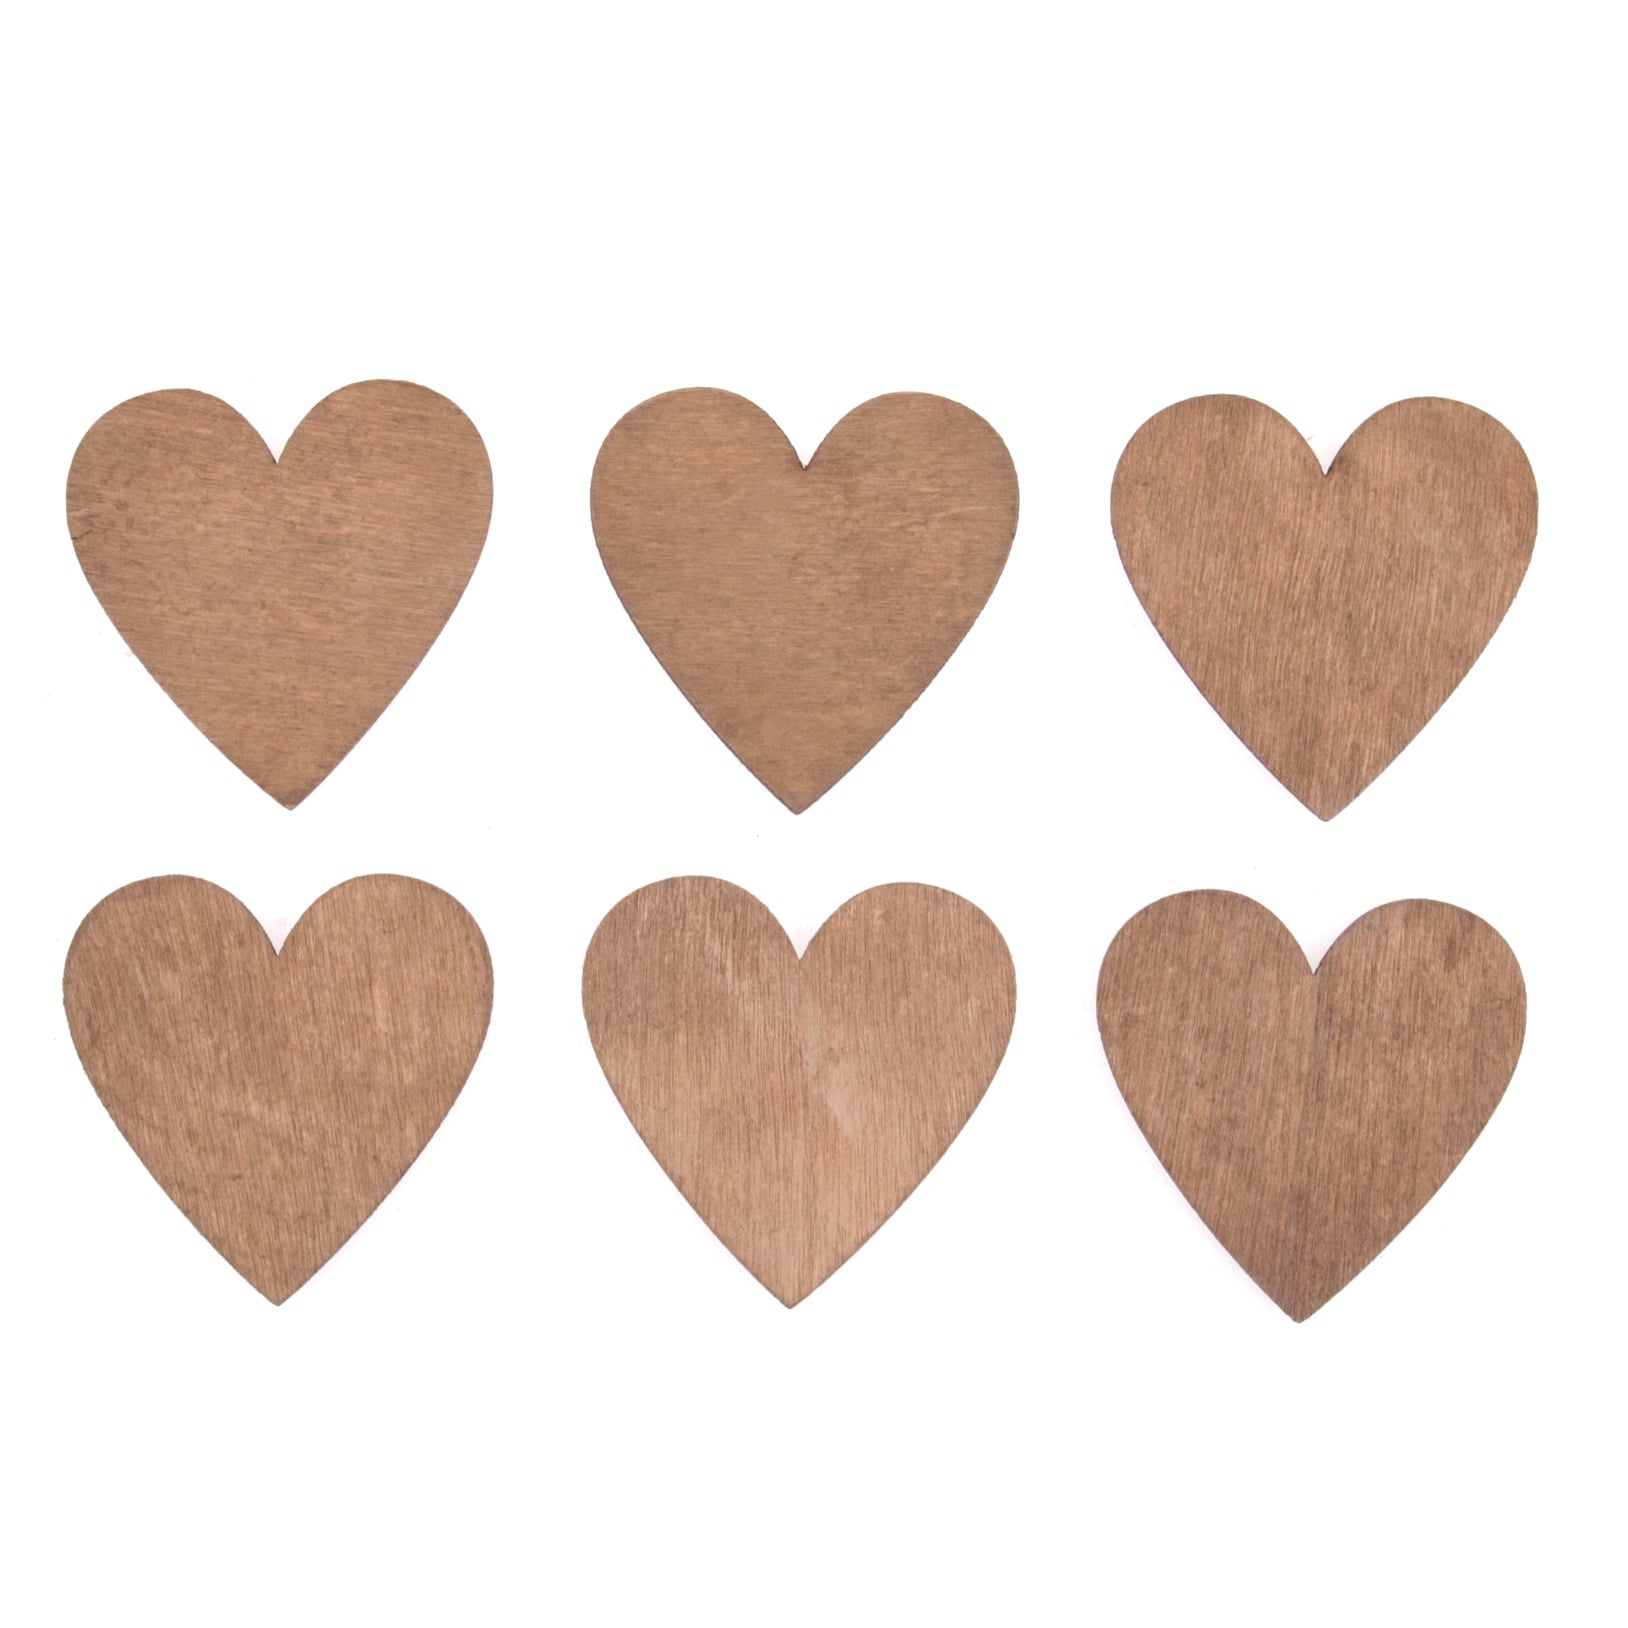 Craft Embellishments: Natural Wooden Hearts - 6pk